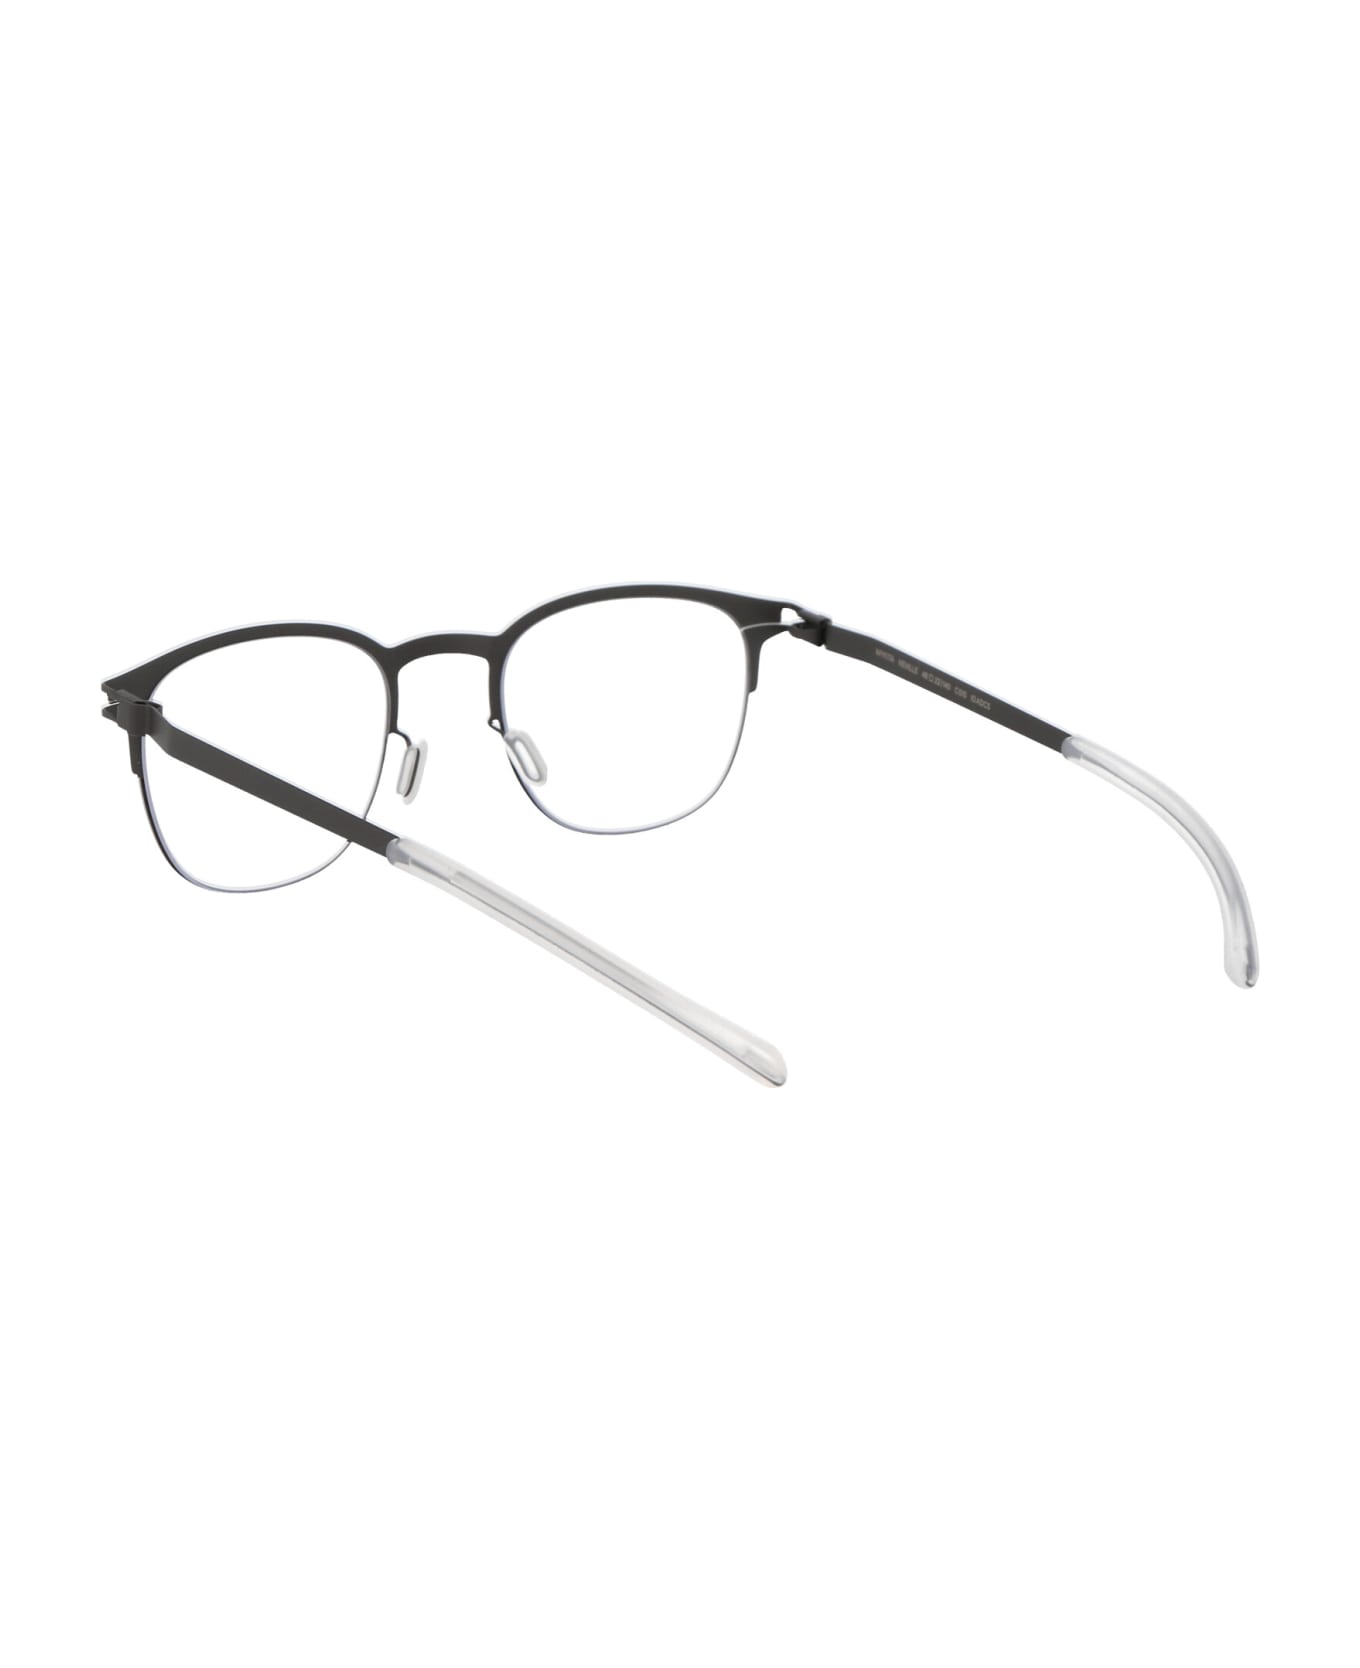 Mykita Neville Glasses - 515 Storm Grey/Black Clear アイウェア